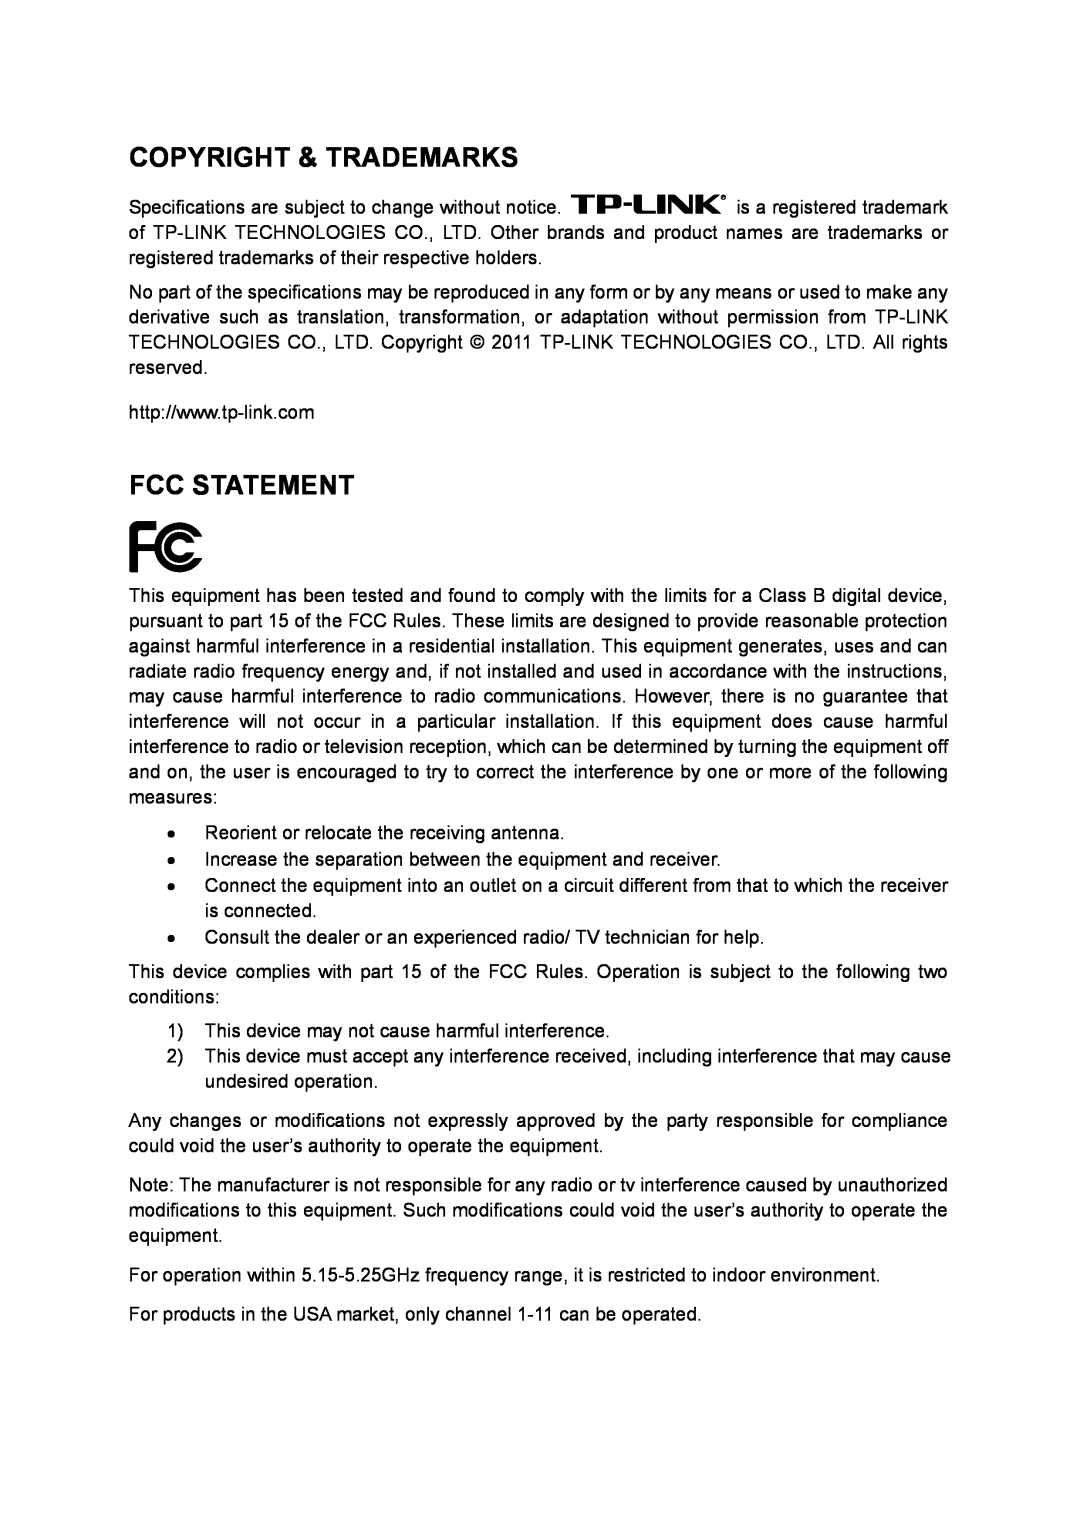 TP-Link WR-842ND manual Copyright & Trademarks, Fcc Statement 